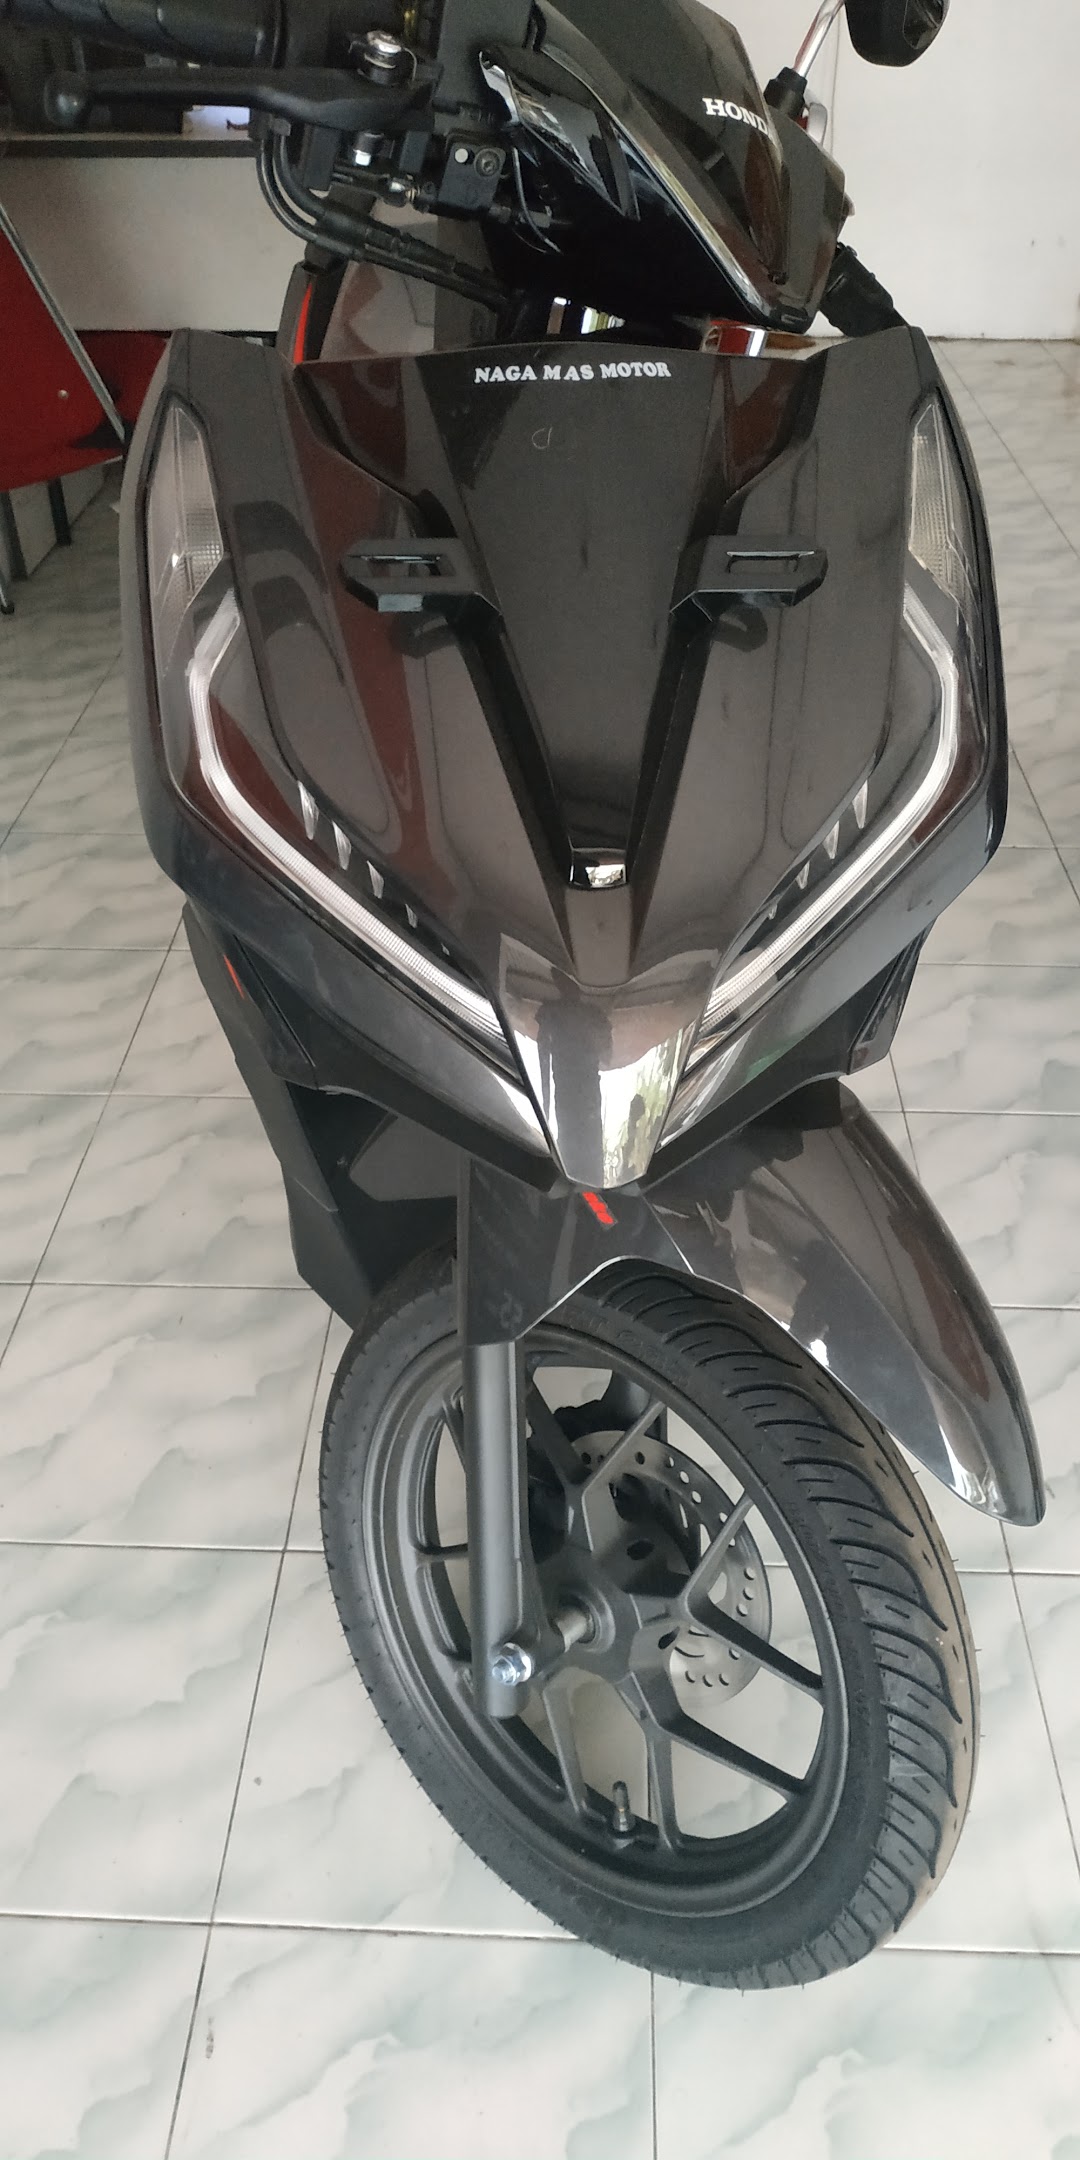 Pos Penjualan Honda Naga Mas Motor Wiyoro